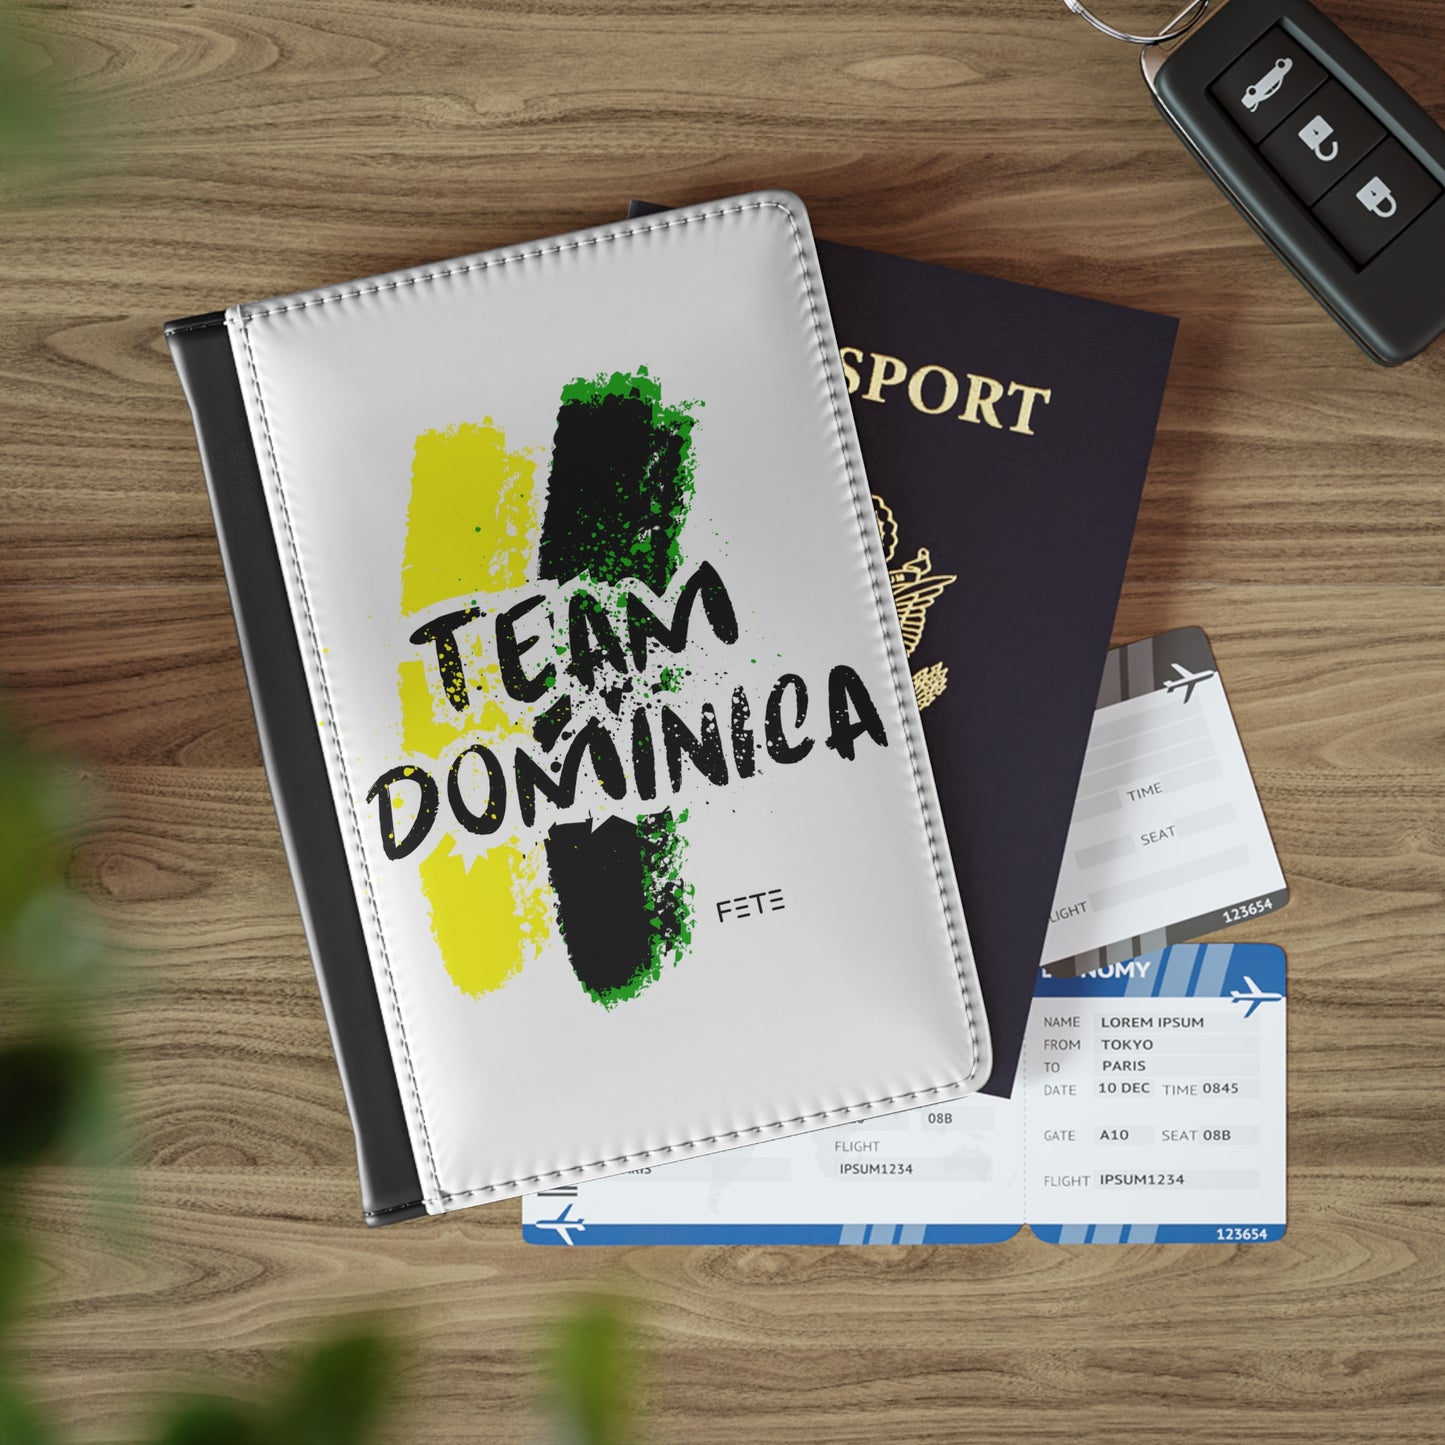 Team Dominica Passport Cover